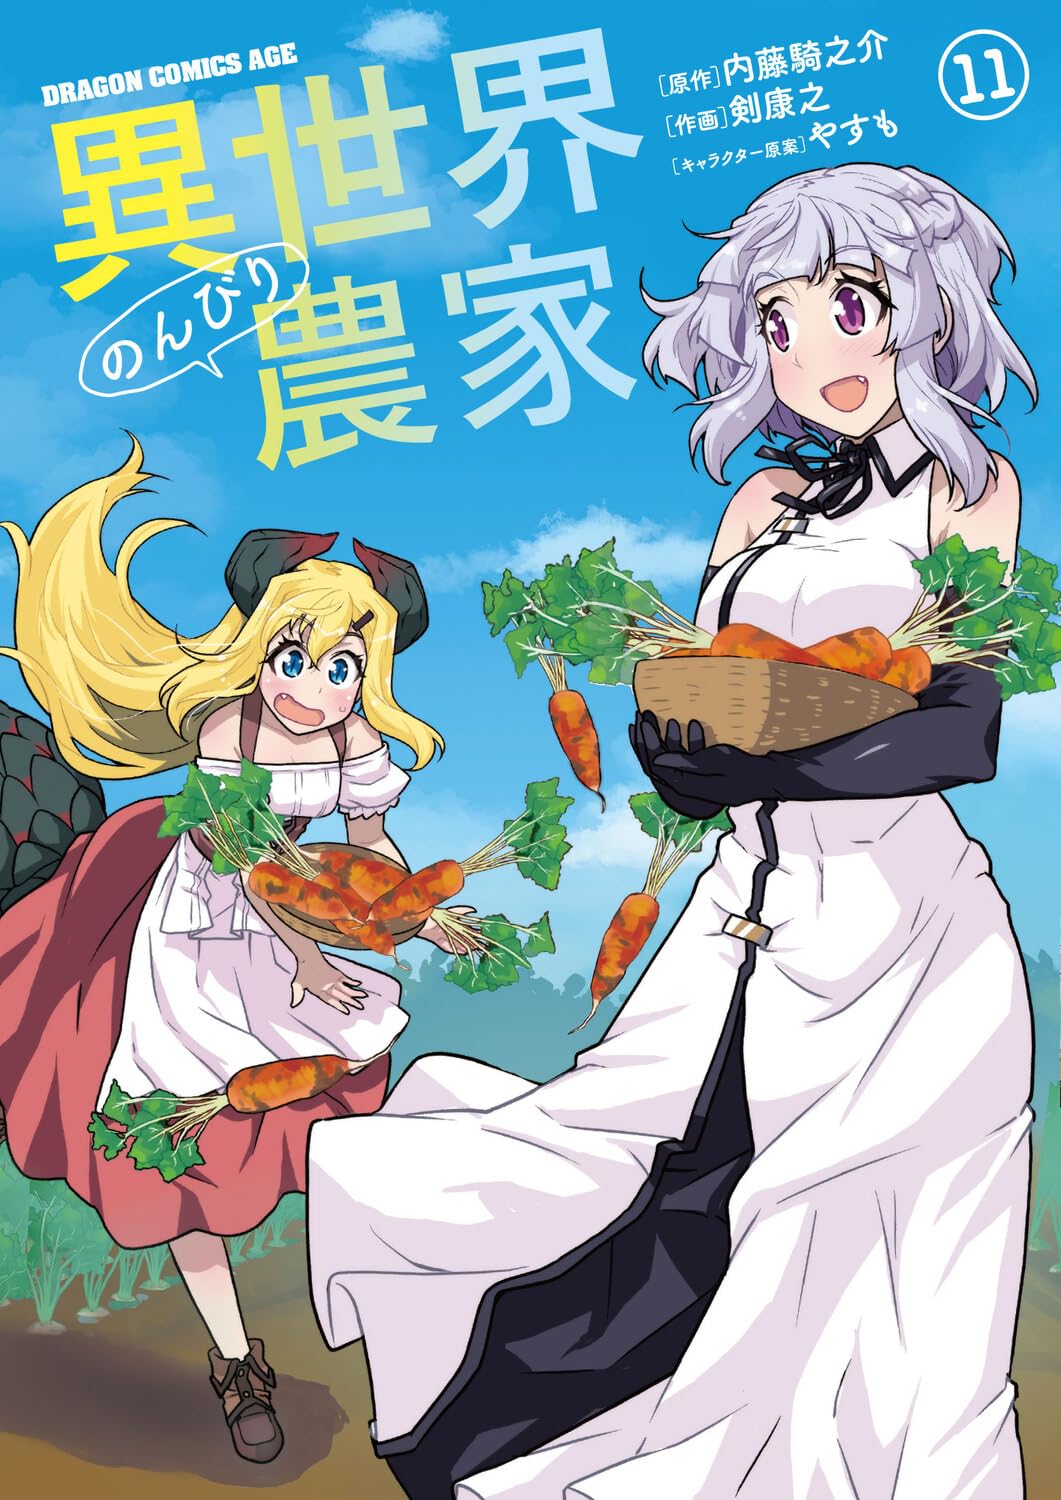 SF & Fantasy Manga – 2 Label_Dragon Comics Age – Japanese Book Store